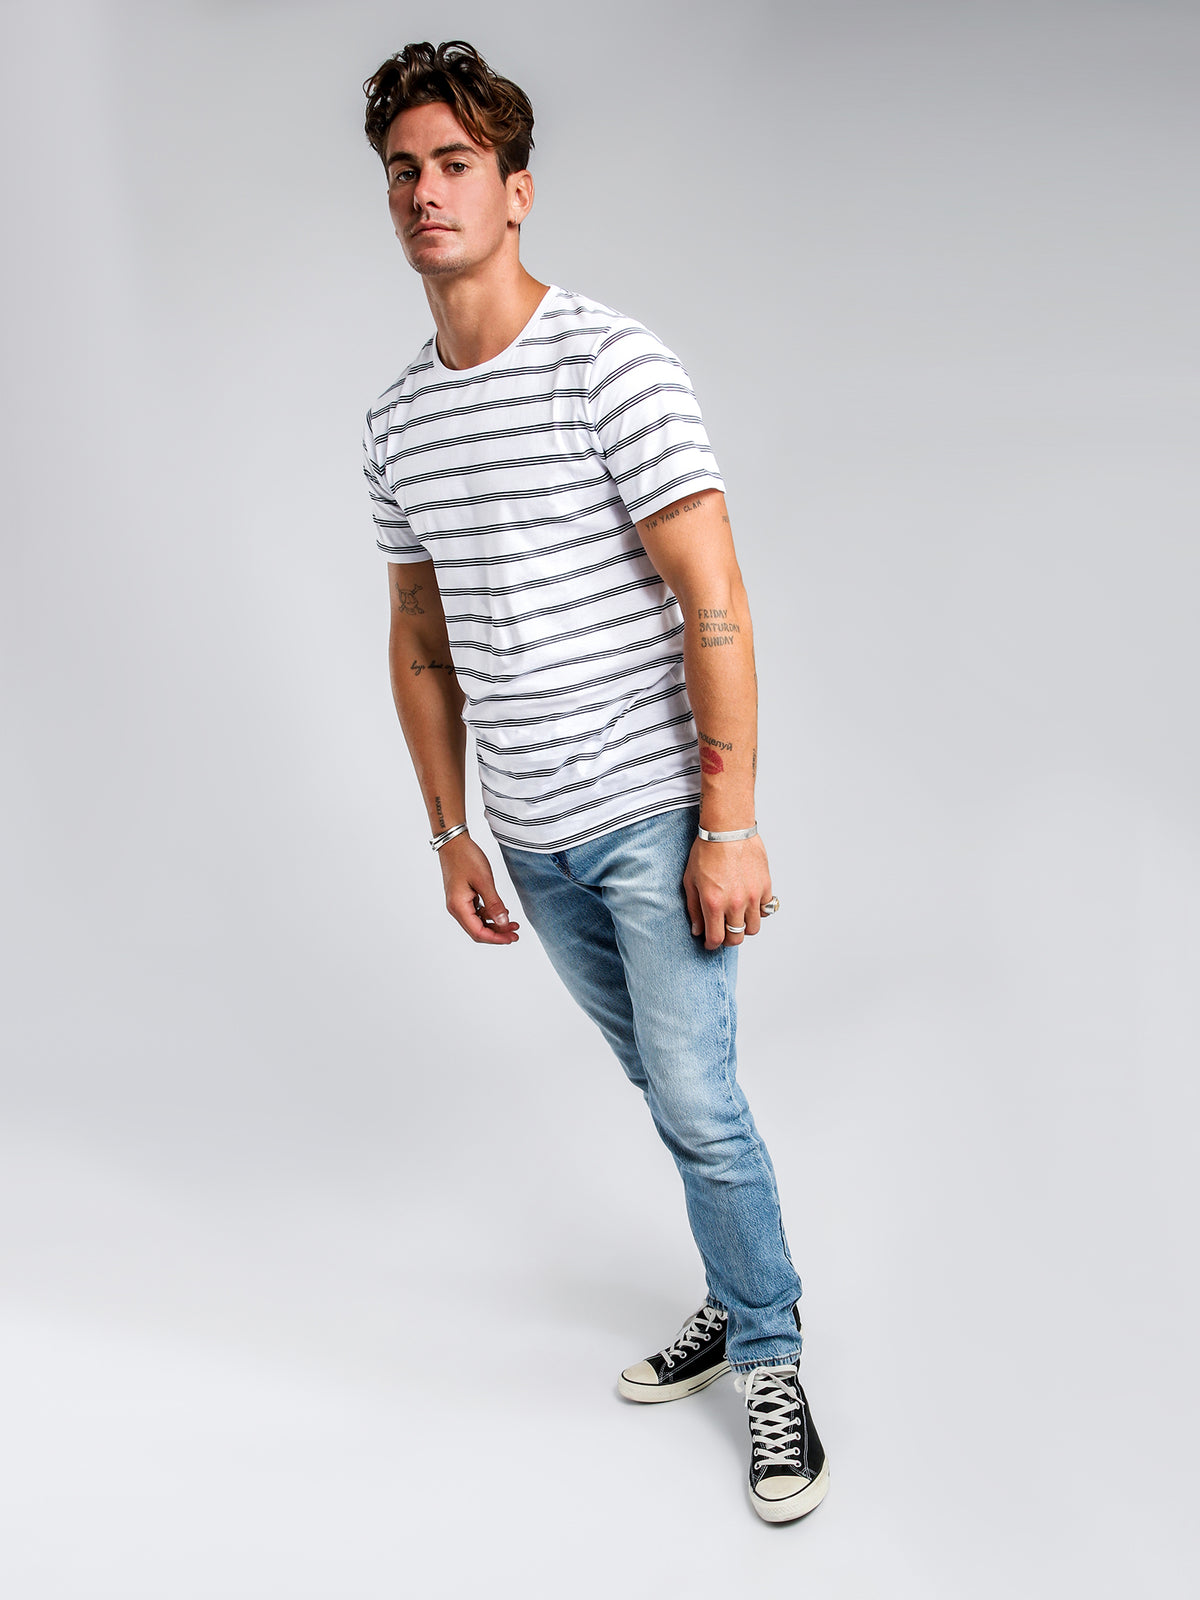 Chase Short Sleeve T-Shirt in White &amp; Navy Stripe